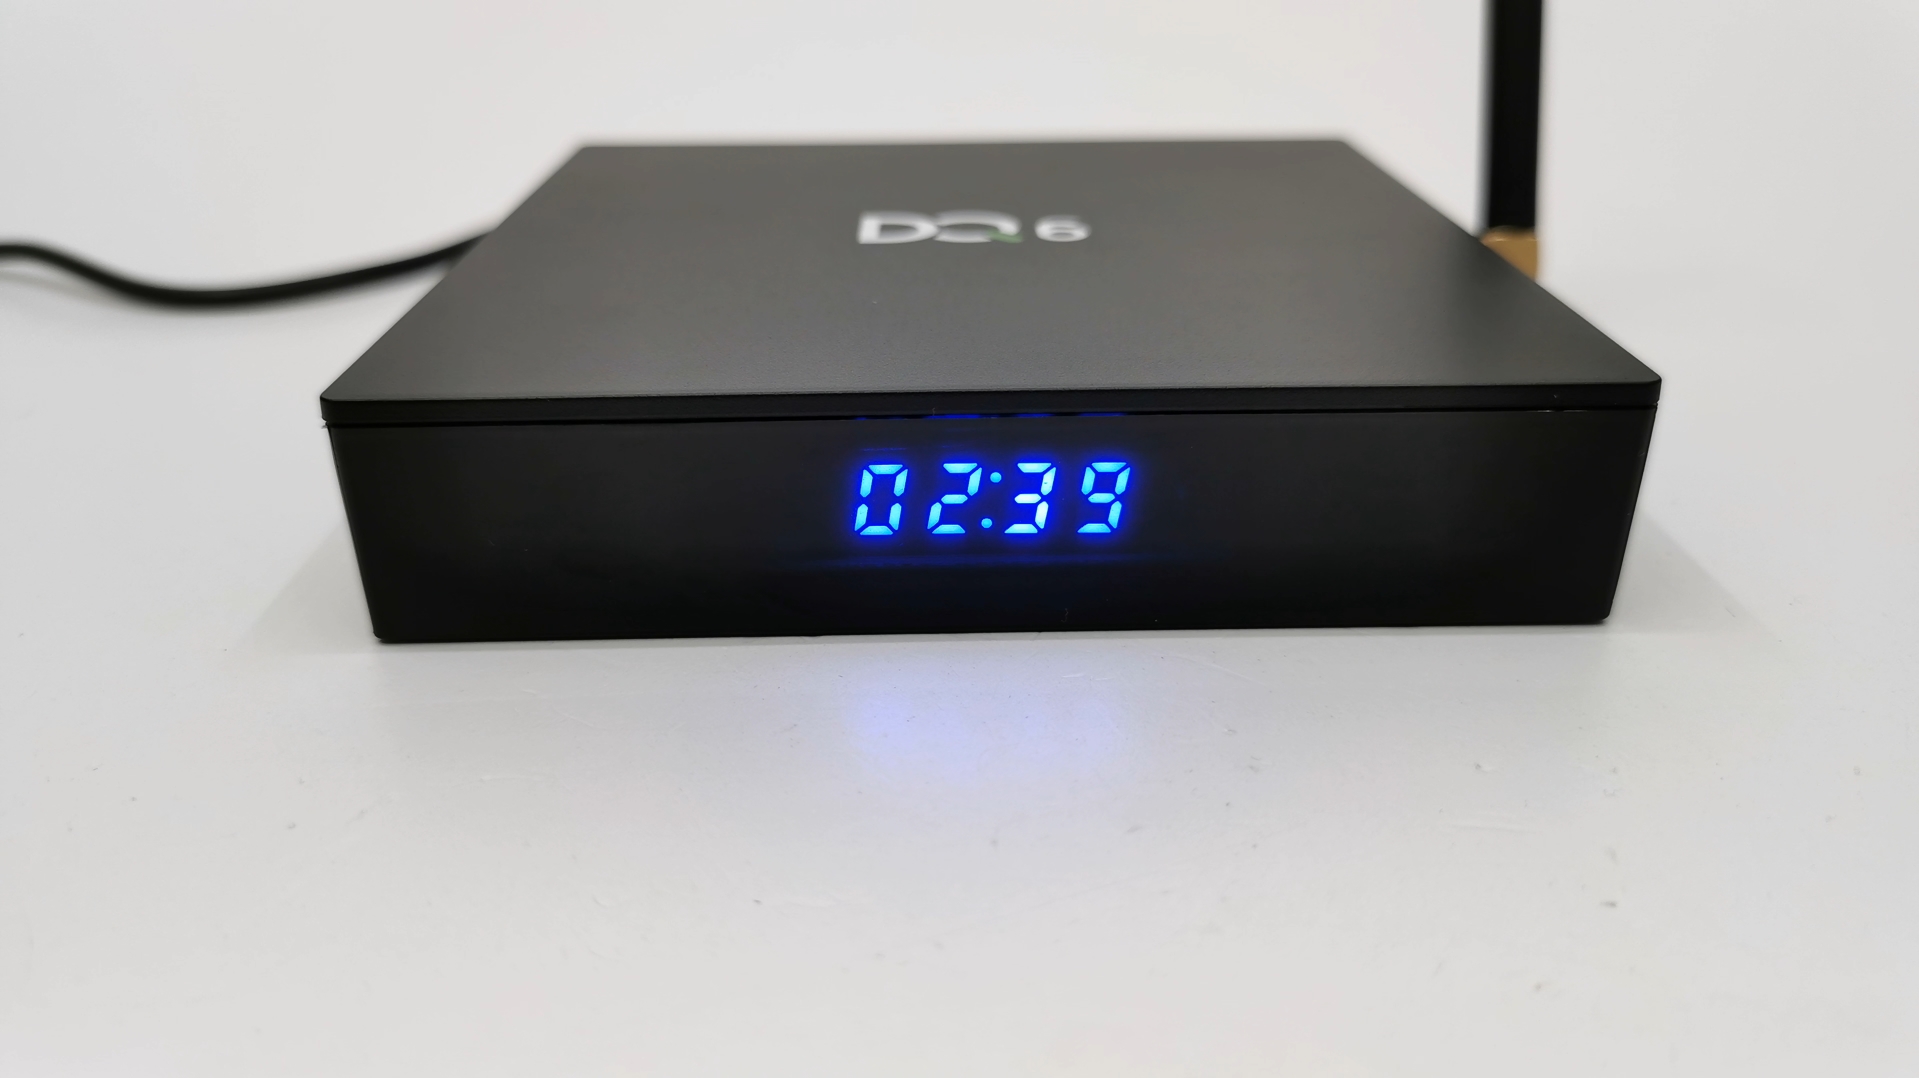 DQ6 TV Box front LED clock display